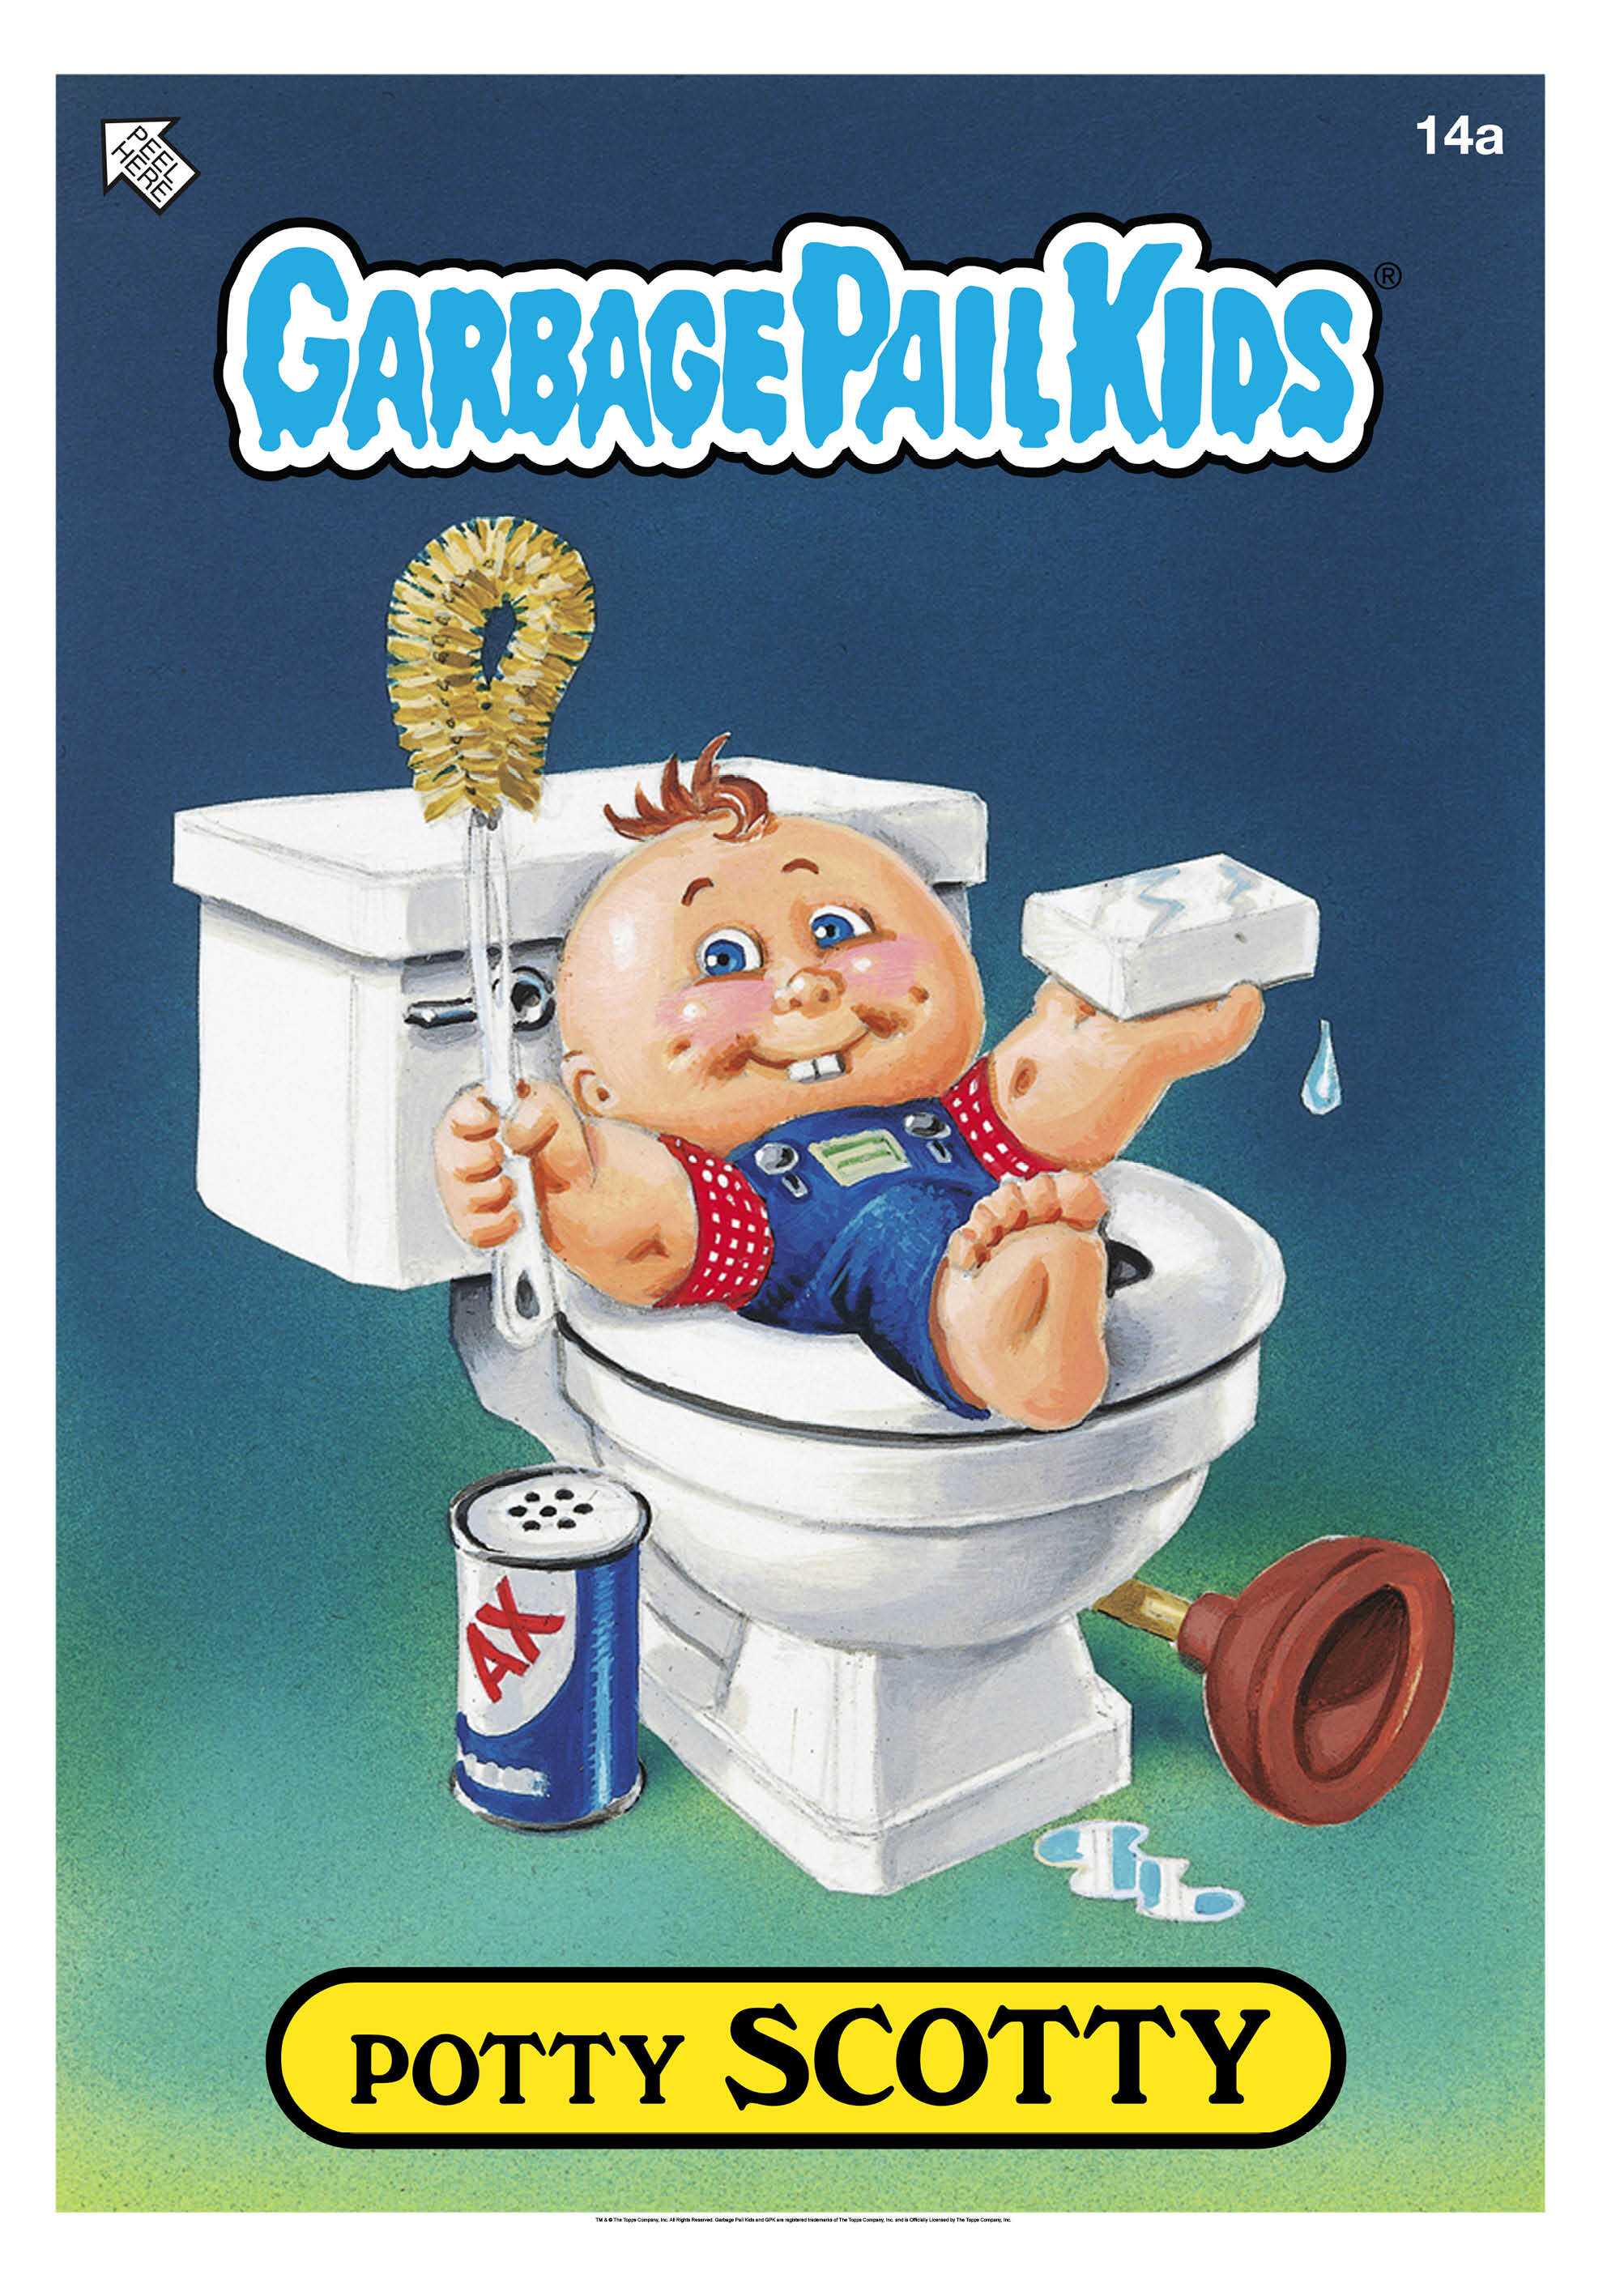 Garbage Pail Kids - Potty Scotty Poster